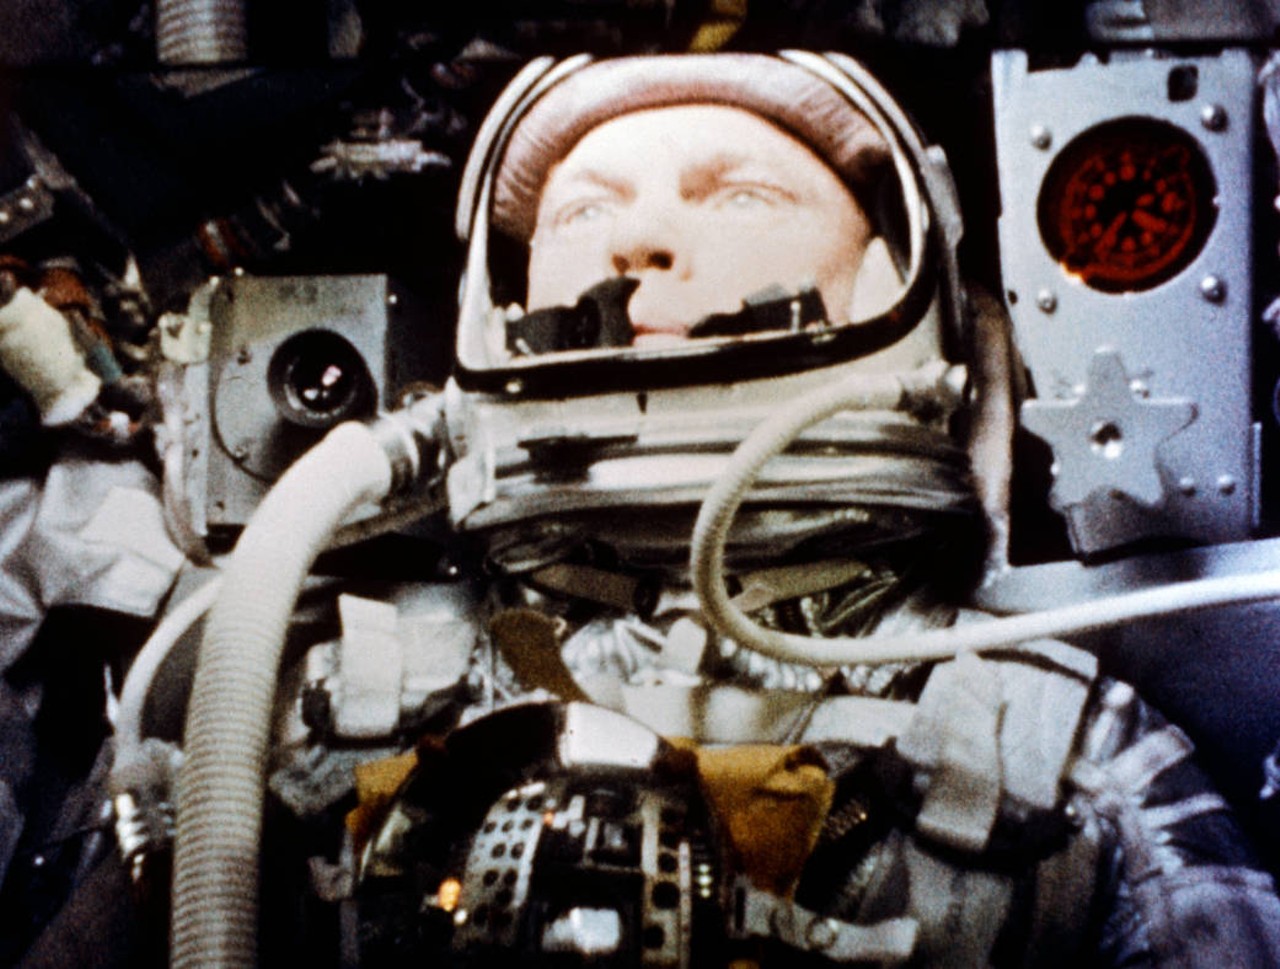 A camera onboard the Friendship 7 Mercury spacecraft photographs astronaut John H. Glenn Jr. during his historic flight on February 20, 1962.